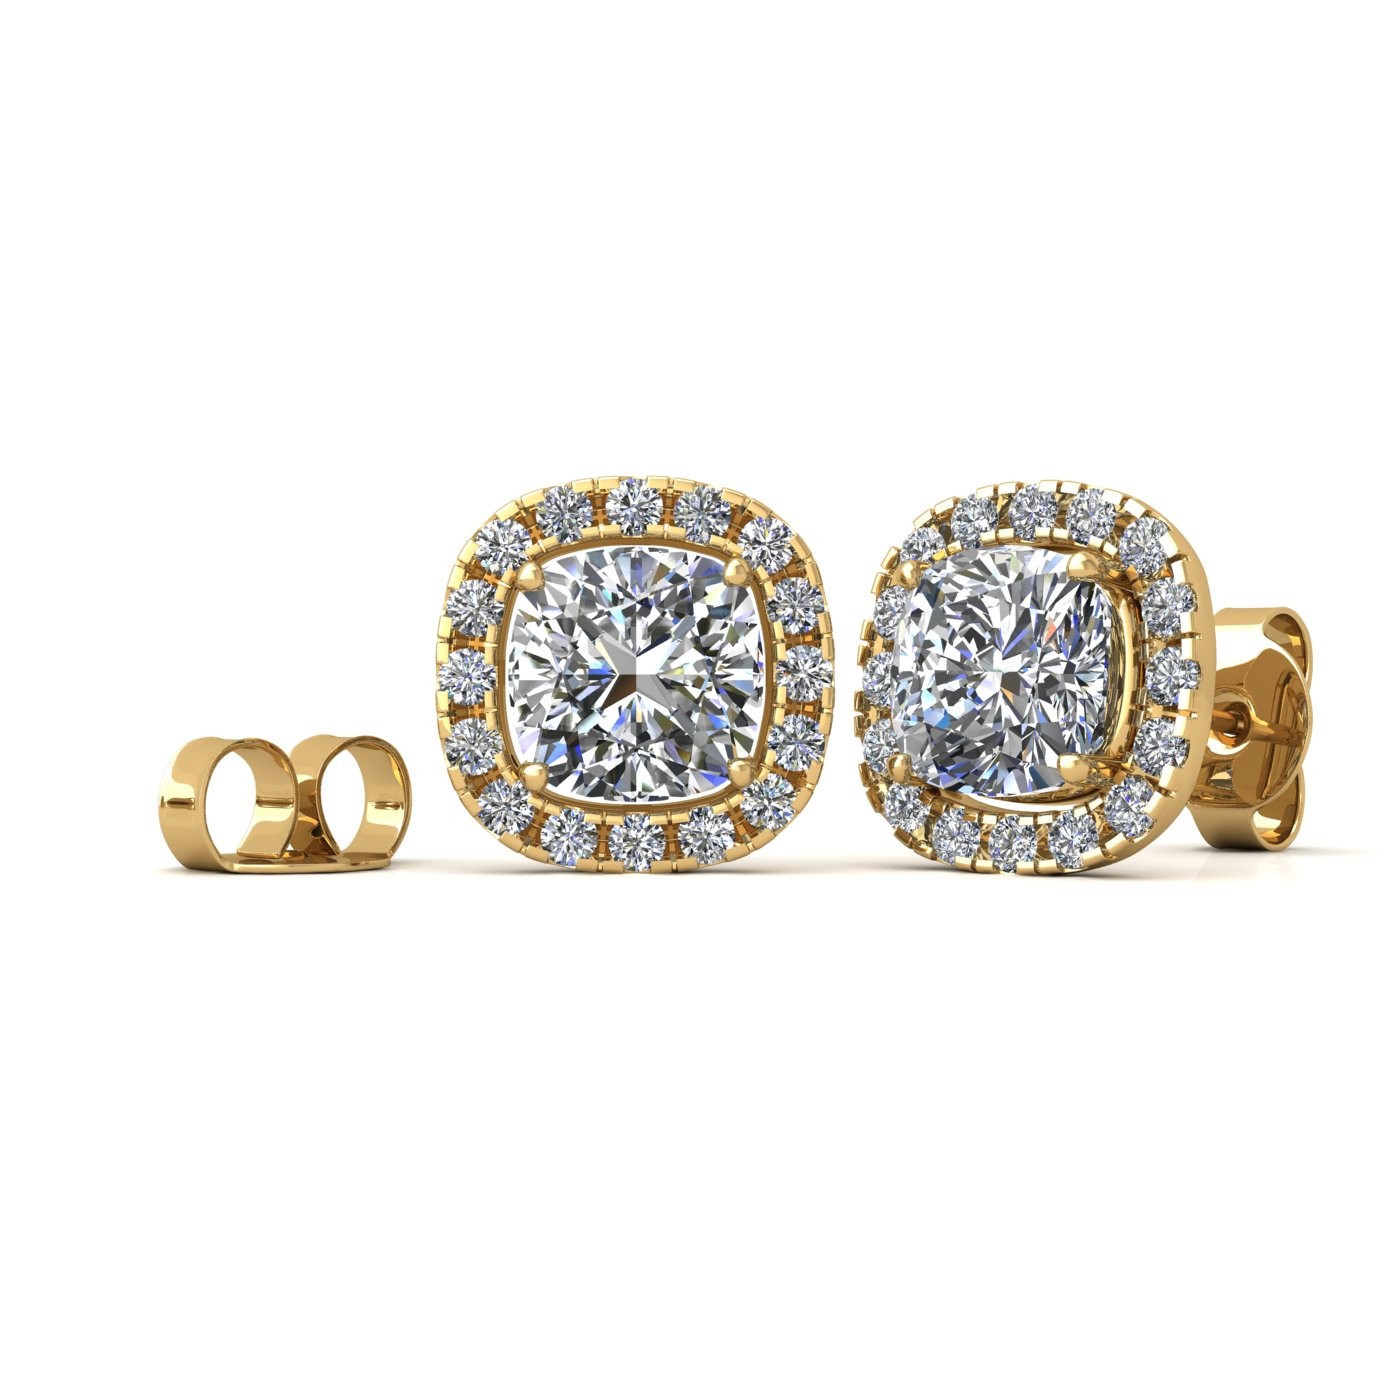 18k yellow gold  0,5 ct each (1,0 tcw) 4 prongs cushion shape diamond earrings with diamond pavÉ set halo